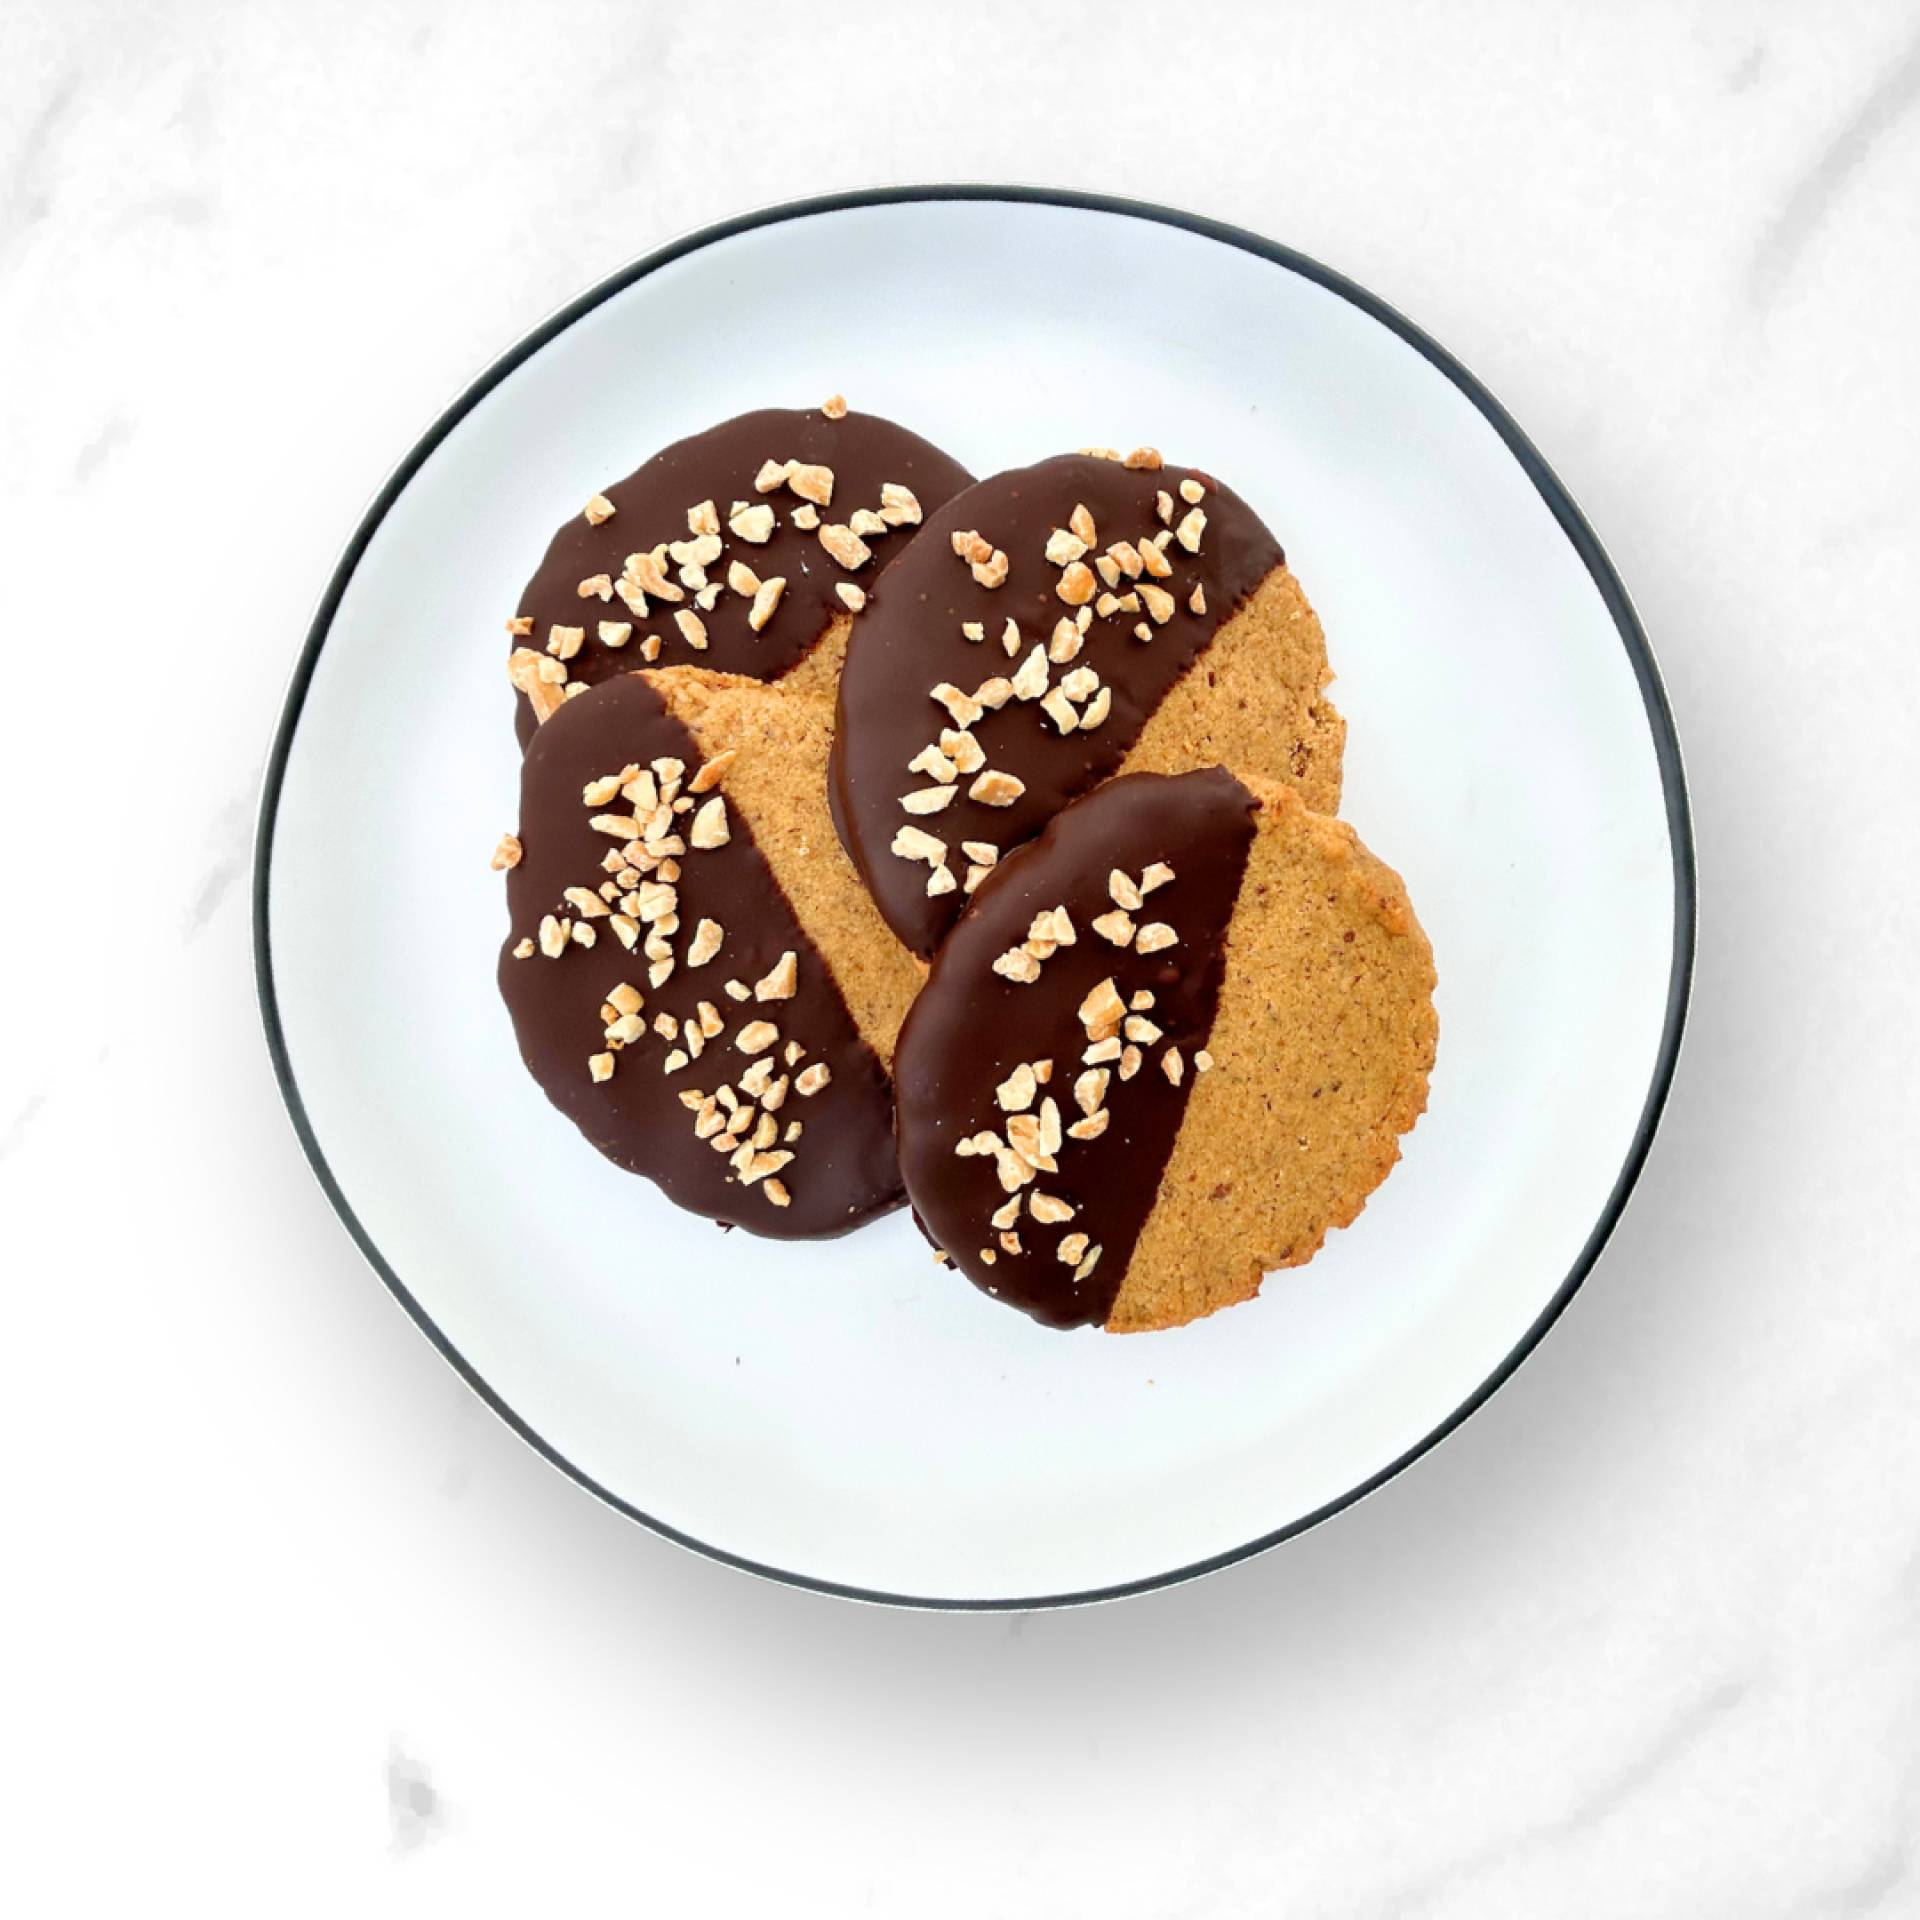 Chocolate Dip'd Peanut Butter Cookies [4 Pack]